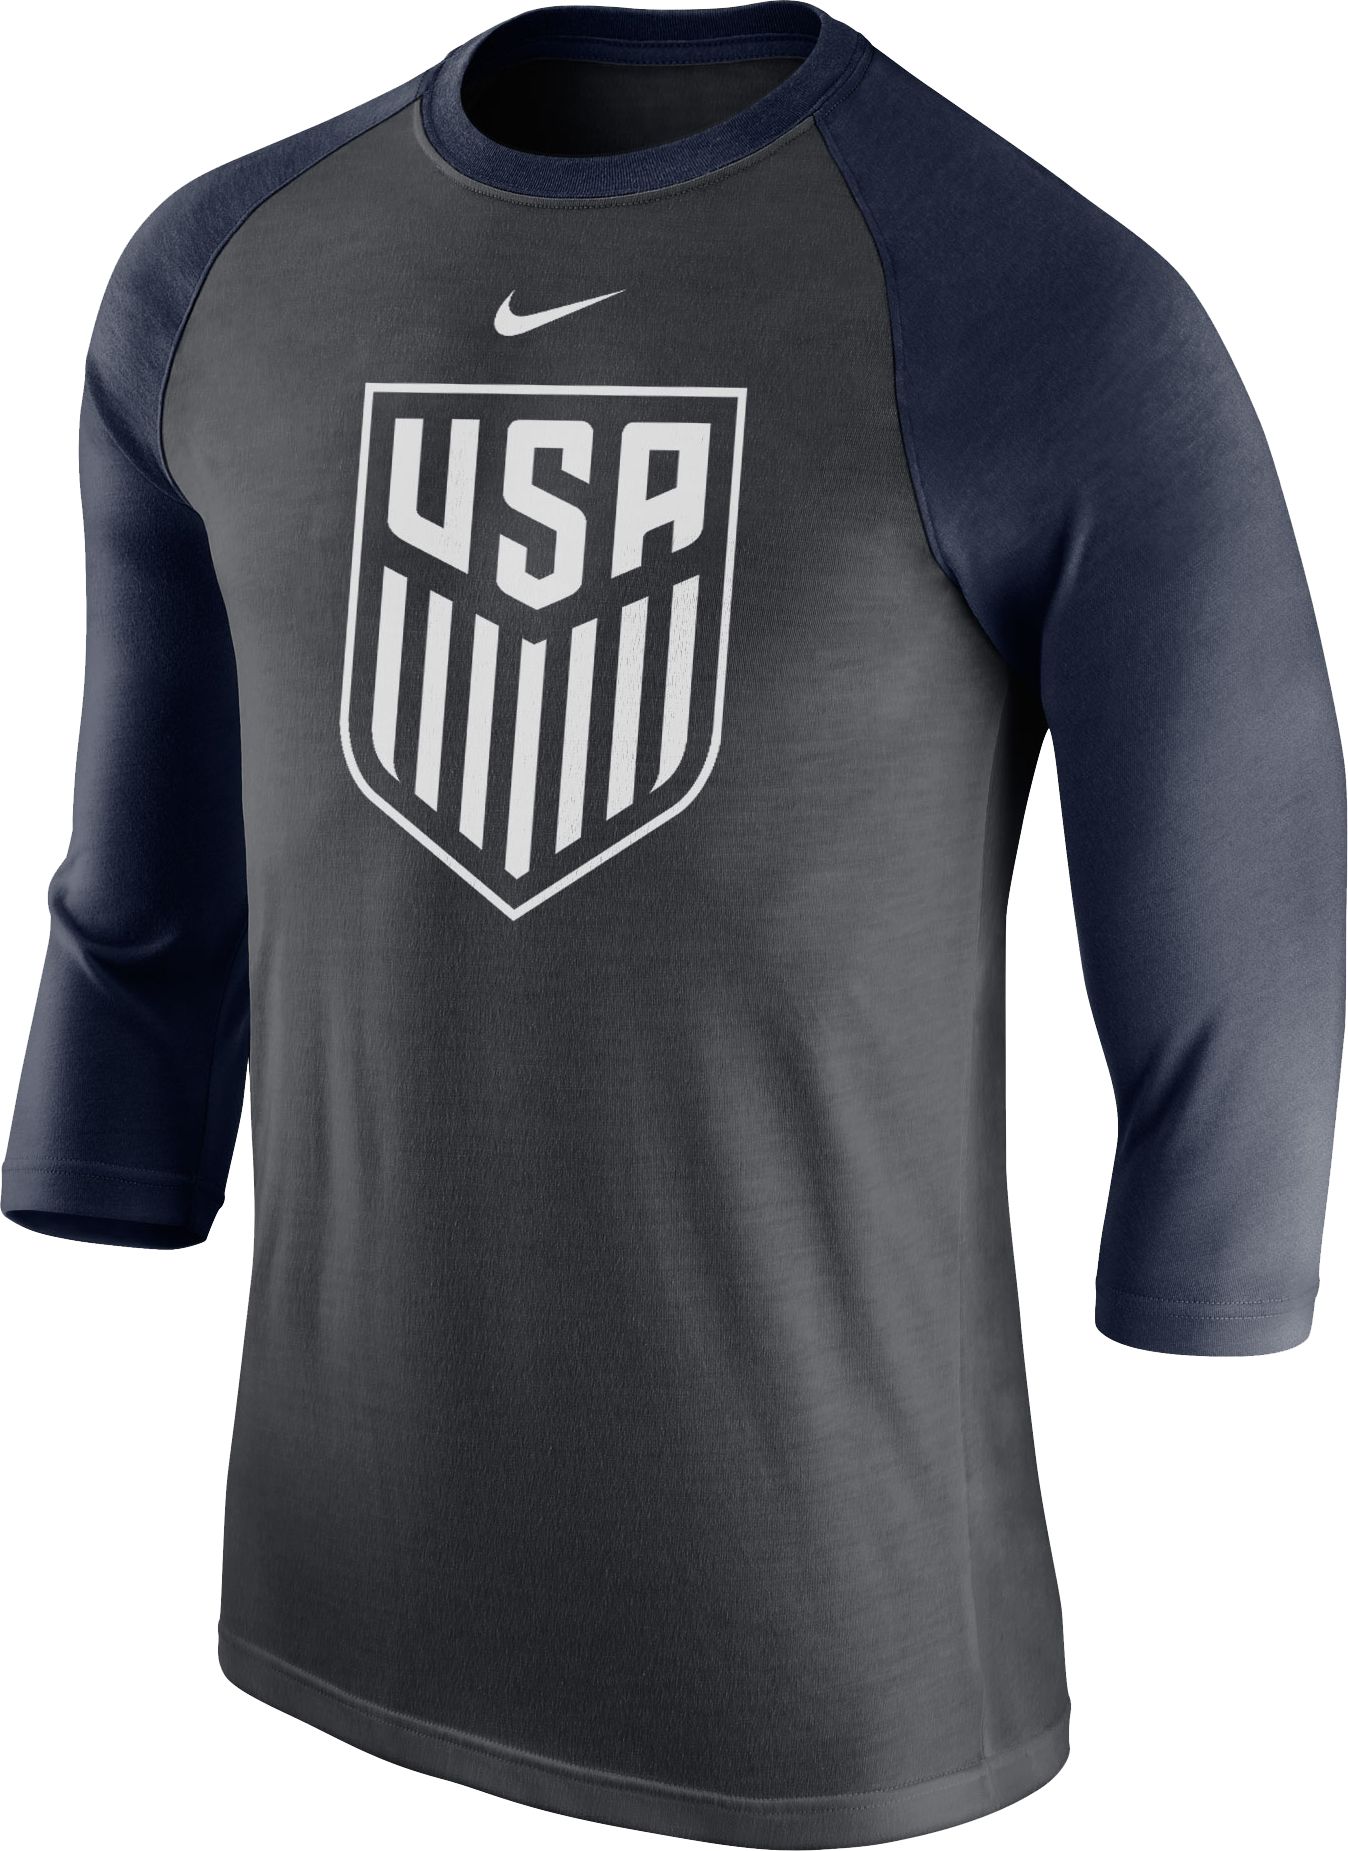 USA Shirts & Jerseys | DICK'S Sporting Goods